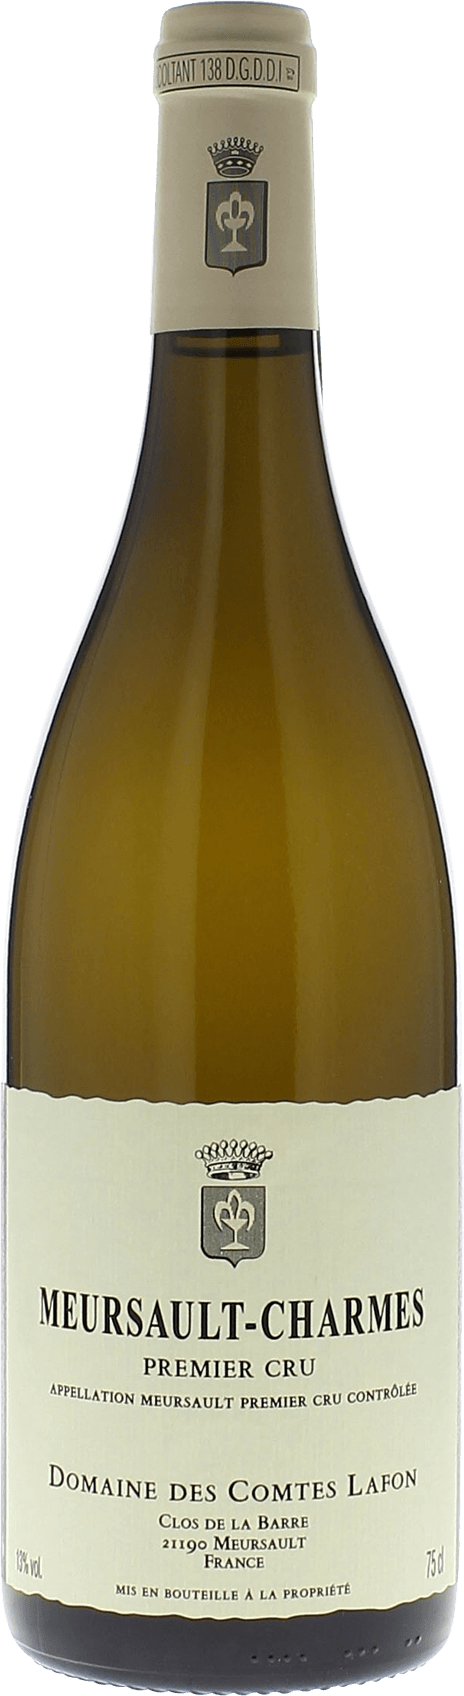 Meursault charmes 1er cru 2016 Domaine Comtes LAFON, Bourgogne blanc